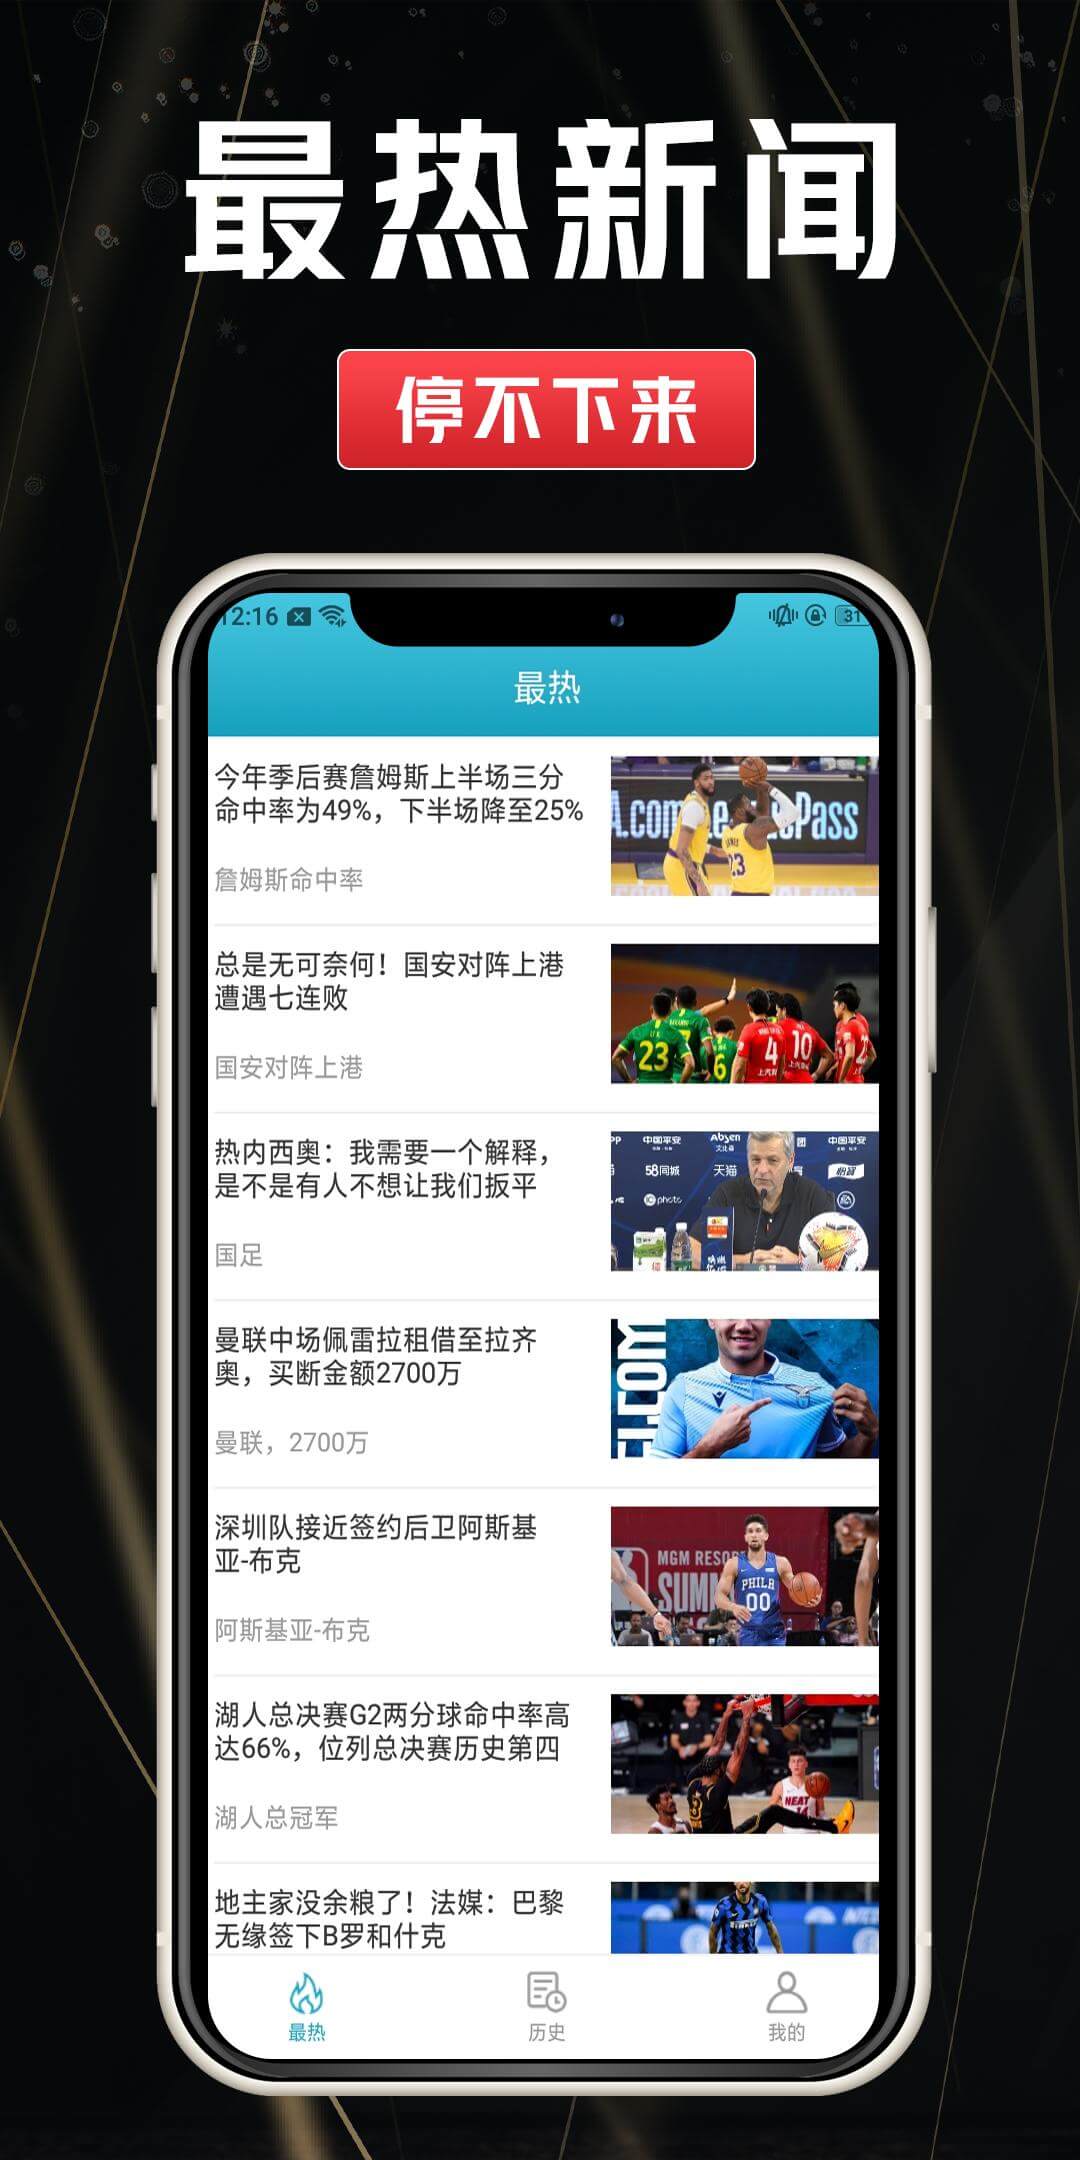 TvT体育app官方下载_TvT体育app官方最新版免费下载